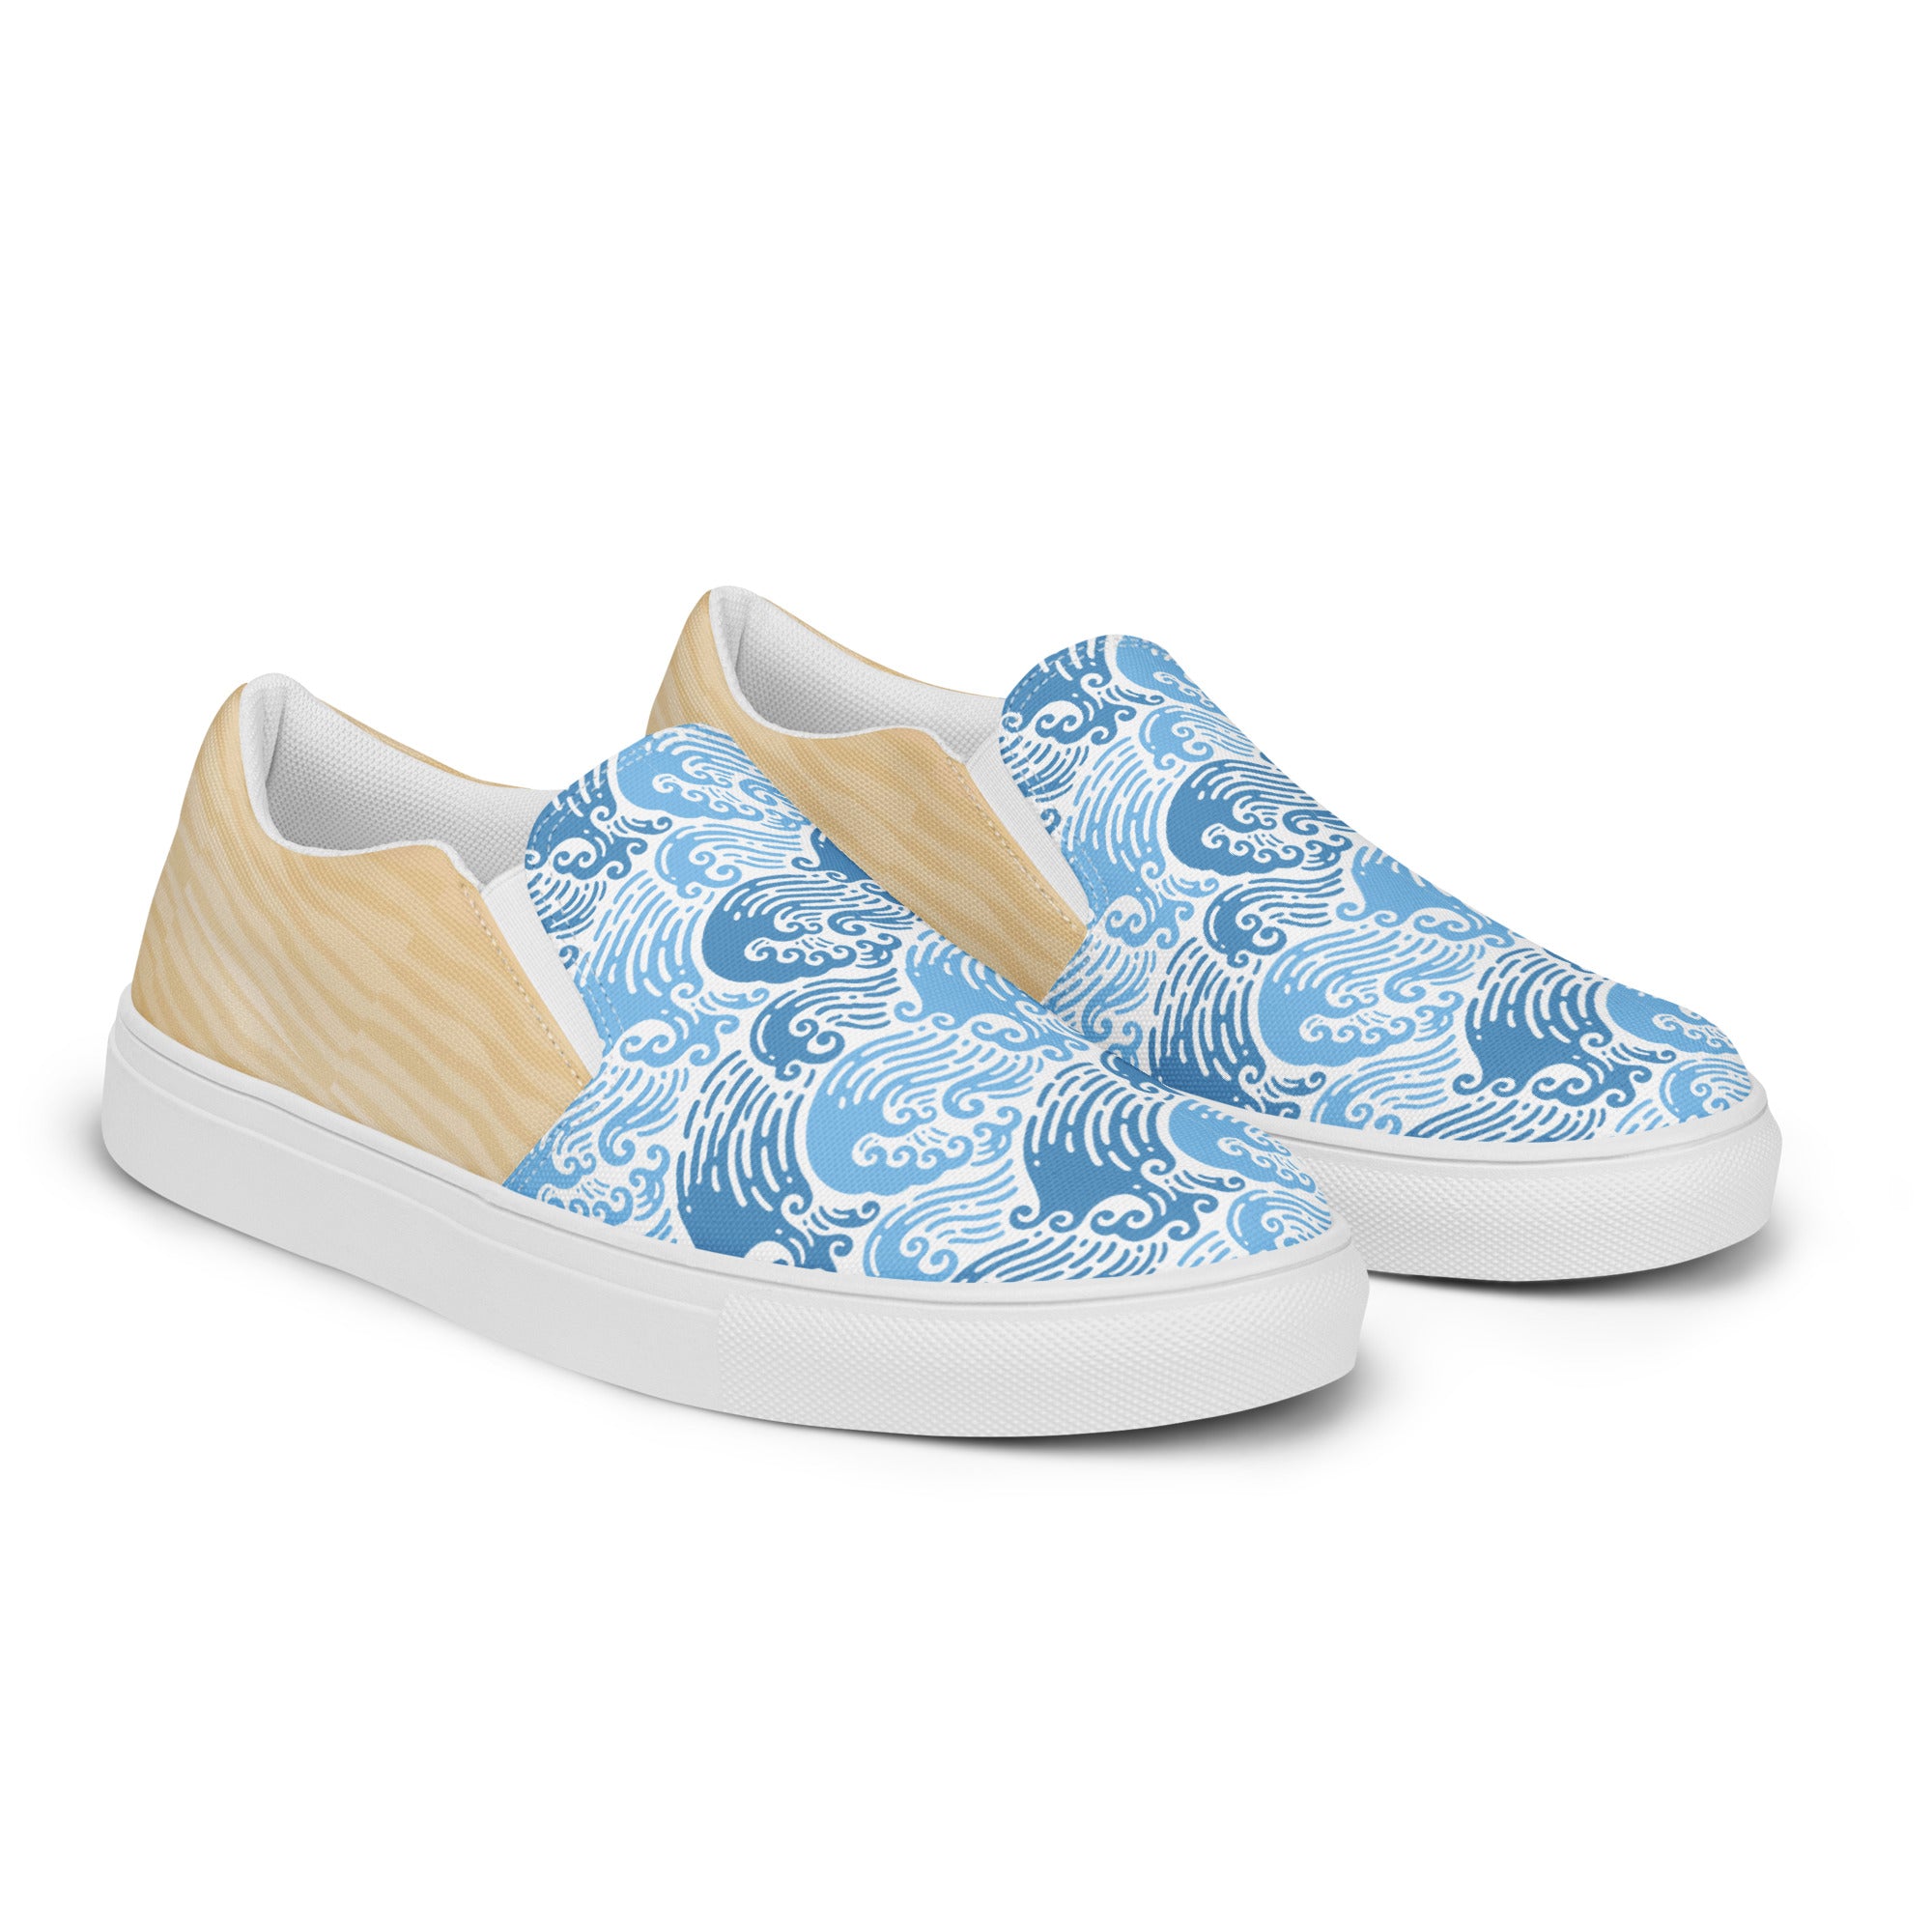 "The Ocean City's" Women’s Slip-on Canvas Shoes